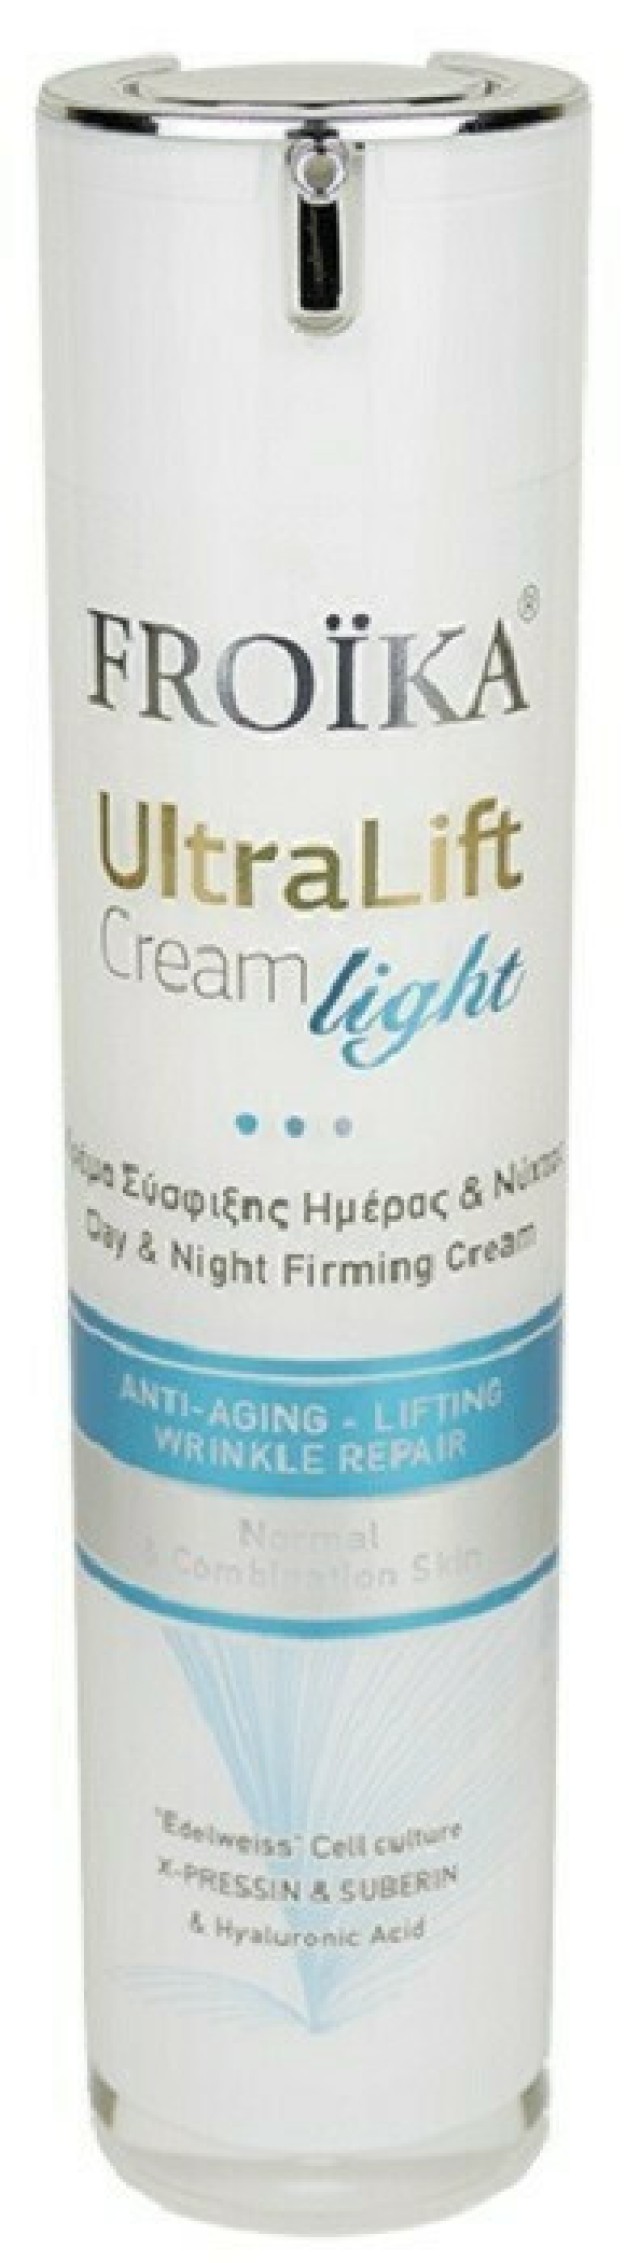 Froika Ultra Lift Cream Light Κρέμα Lifting Αντιγήρανσης - Σύσφιξης Ημέρας & Νυκτός Ελαφριάς Υφής Νέα Συσκευασία Pump 50ml